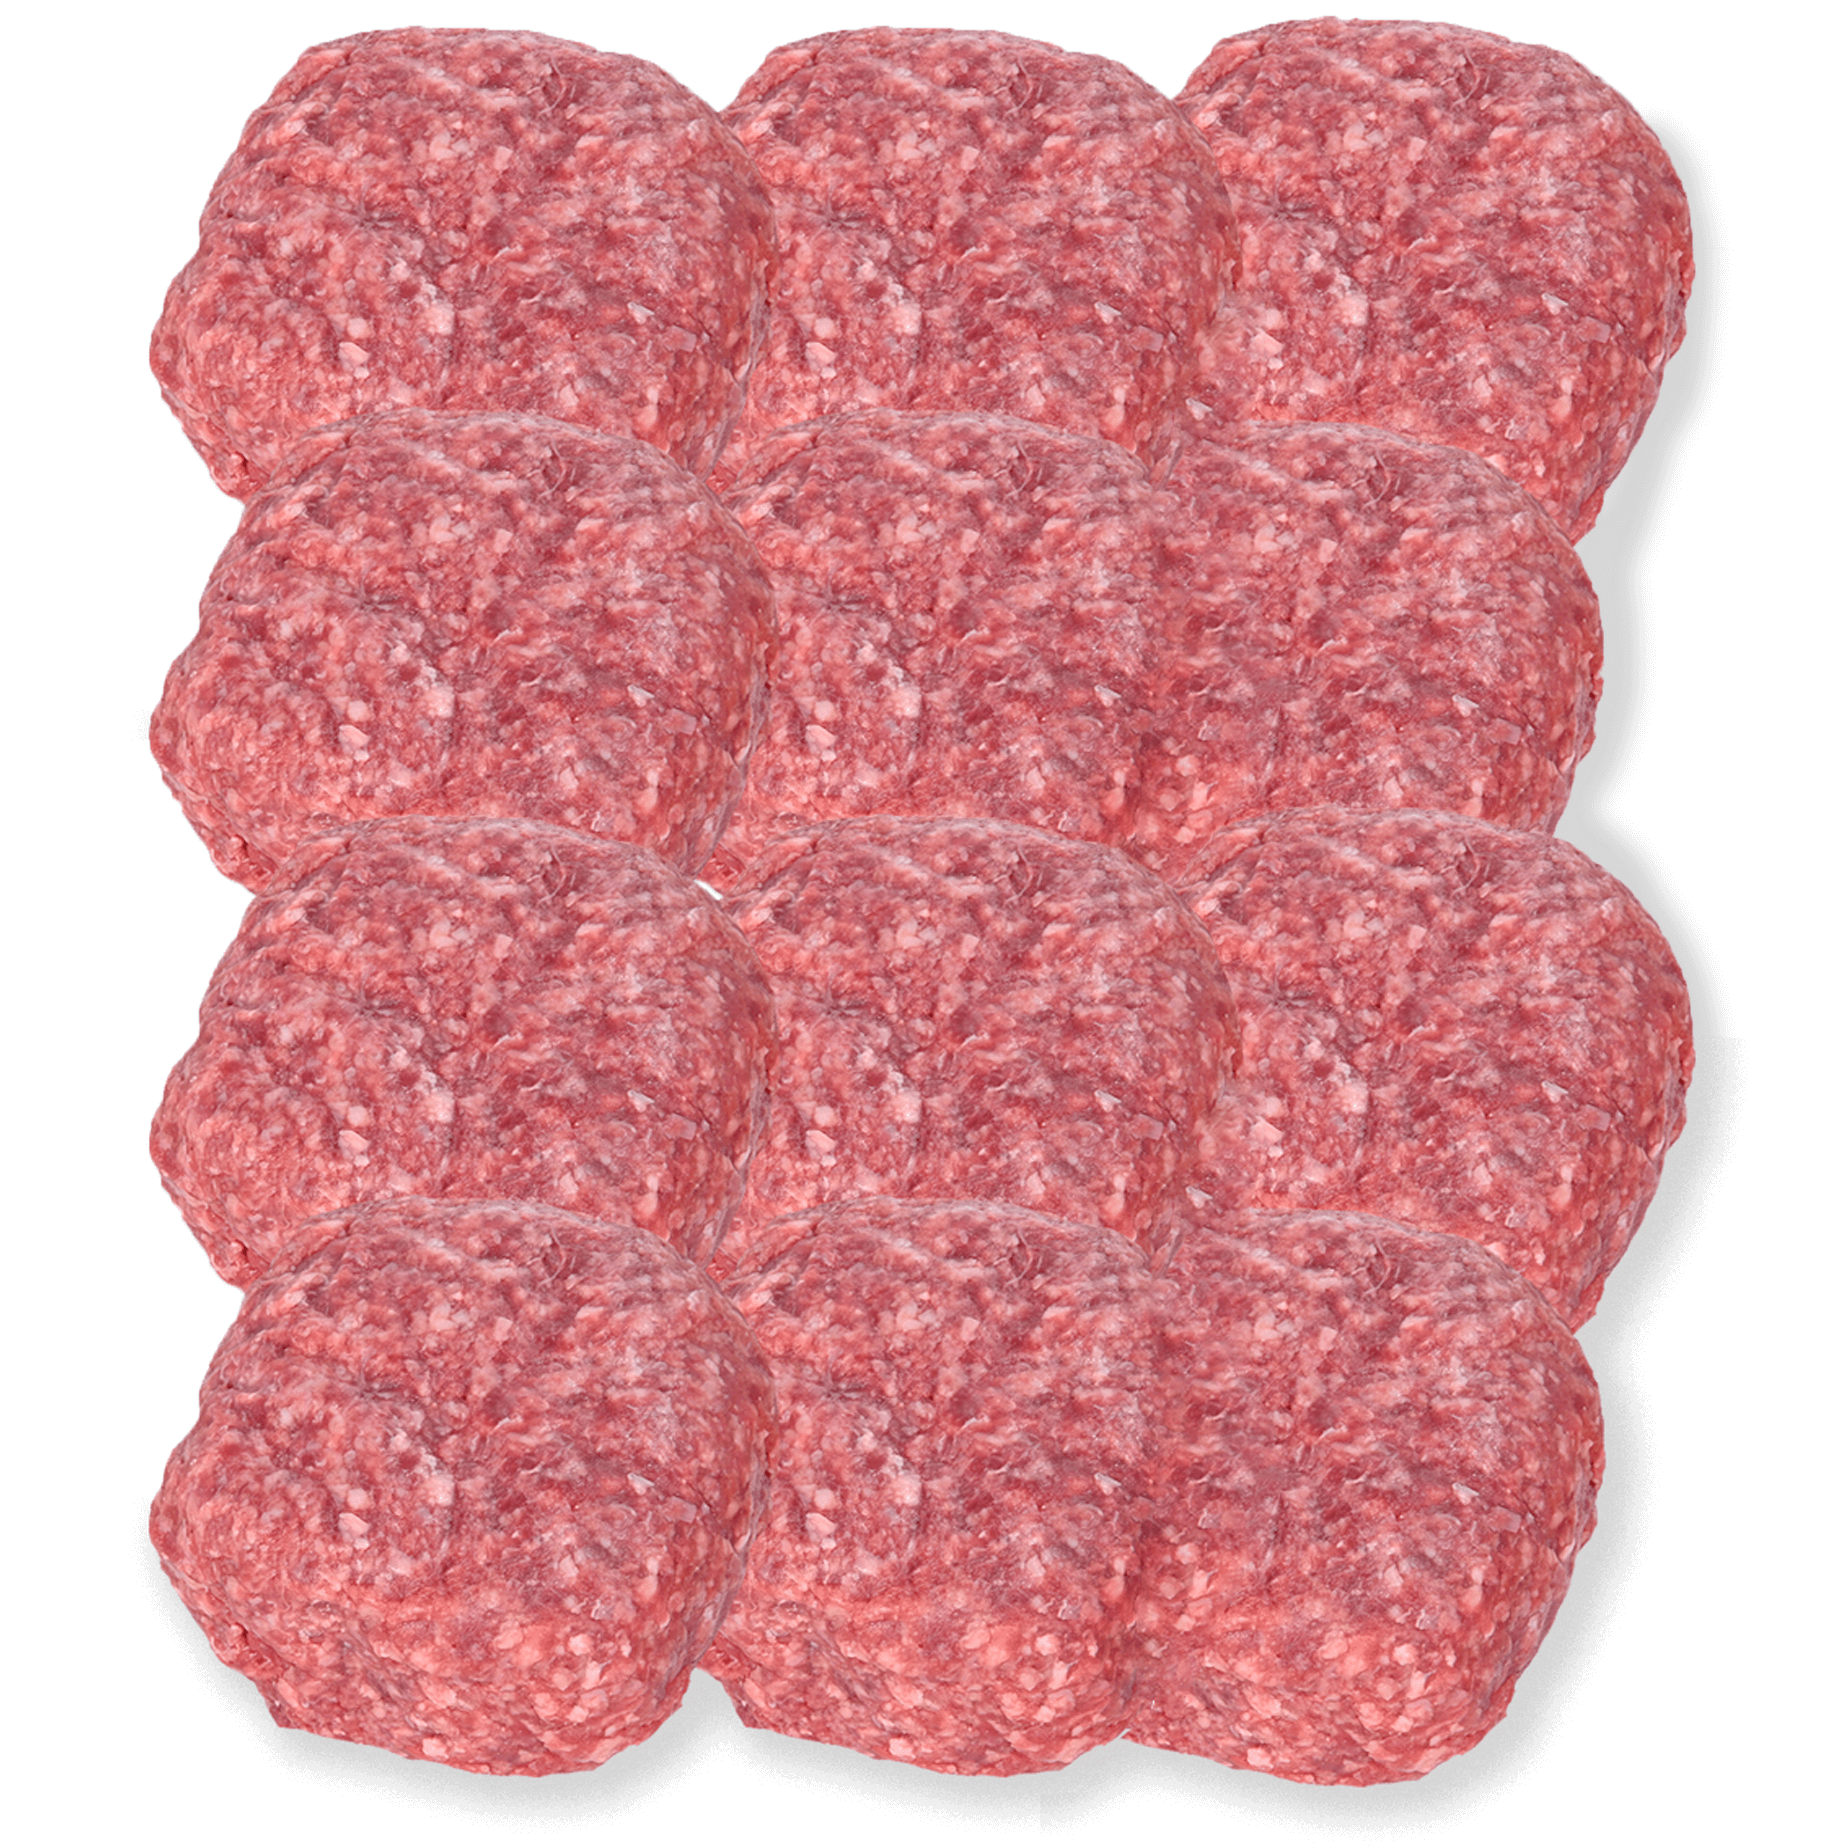 large ground beef bundle